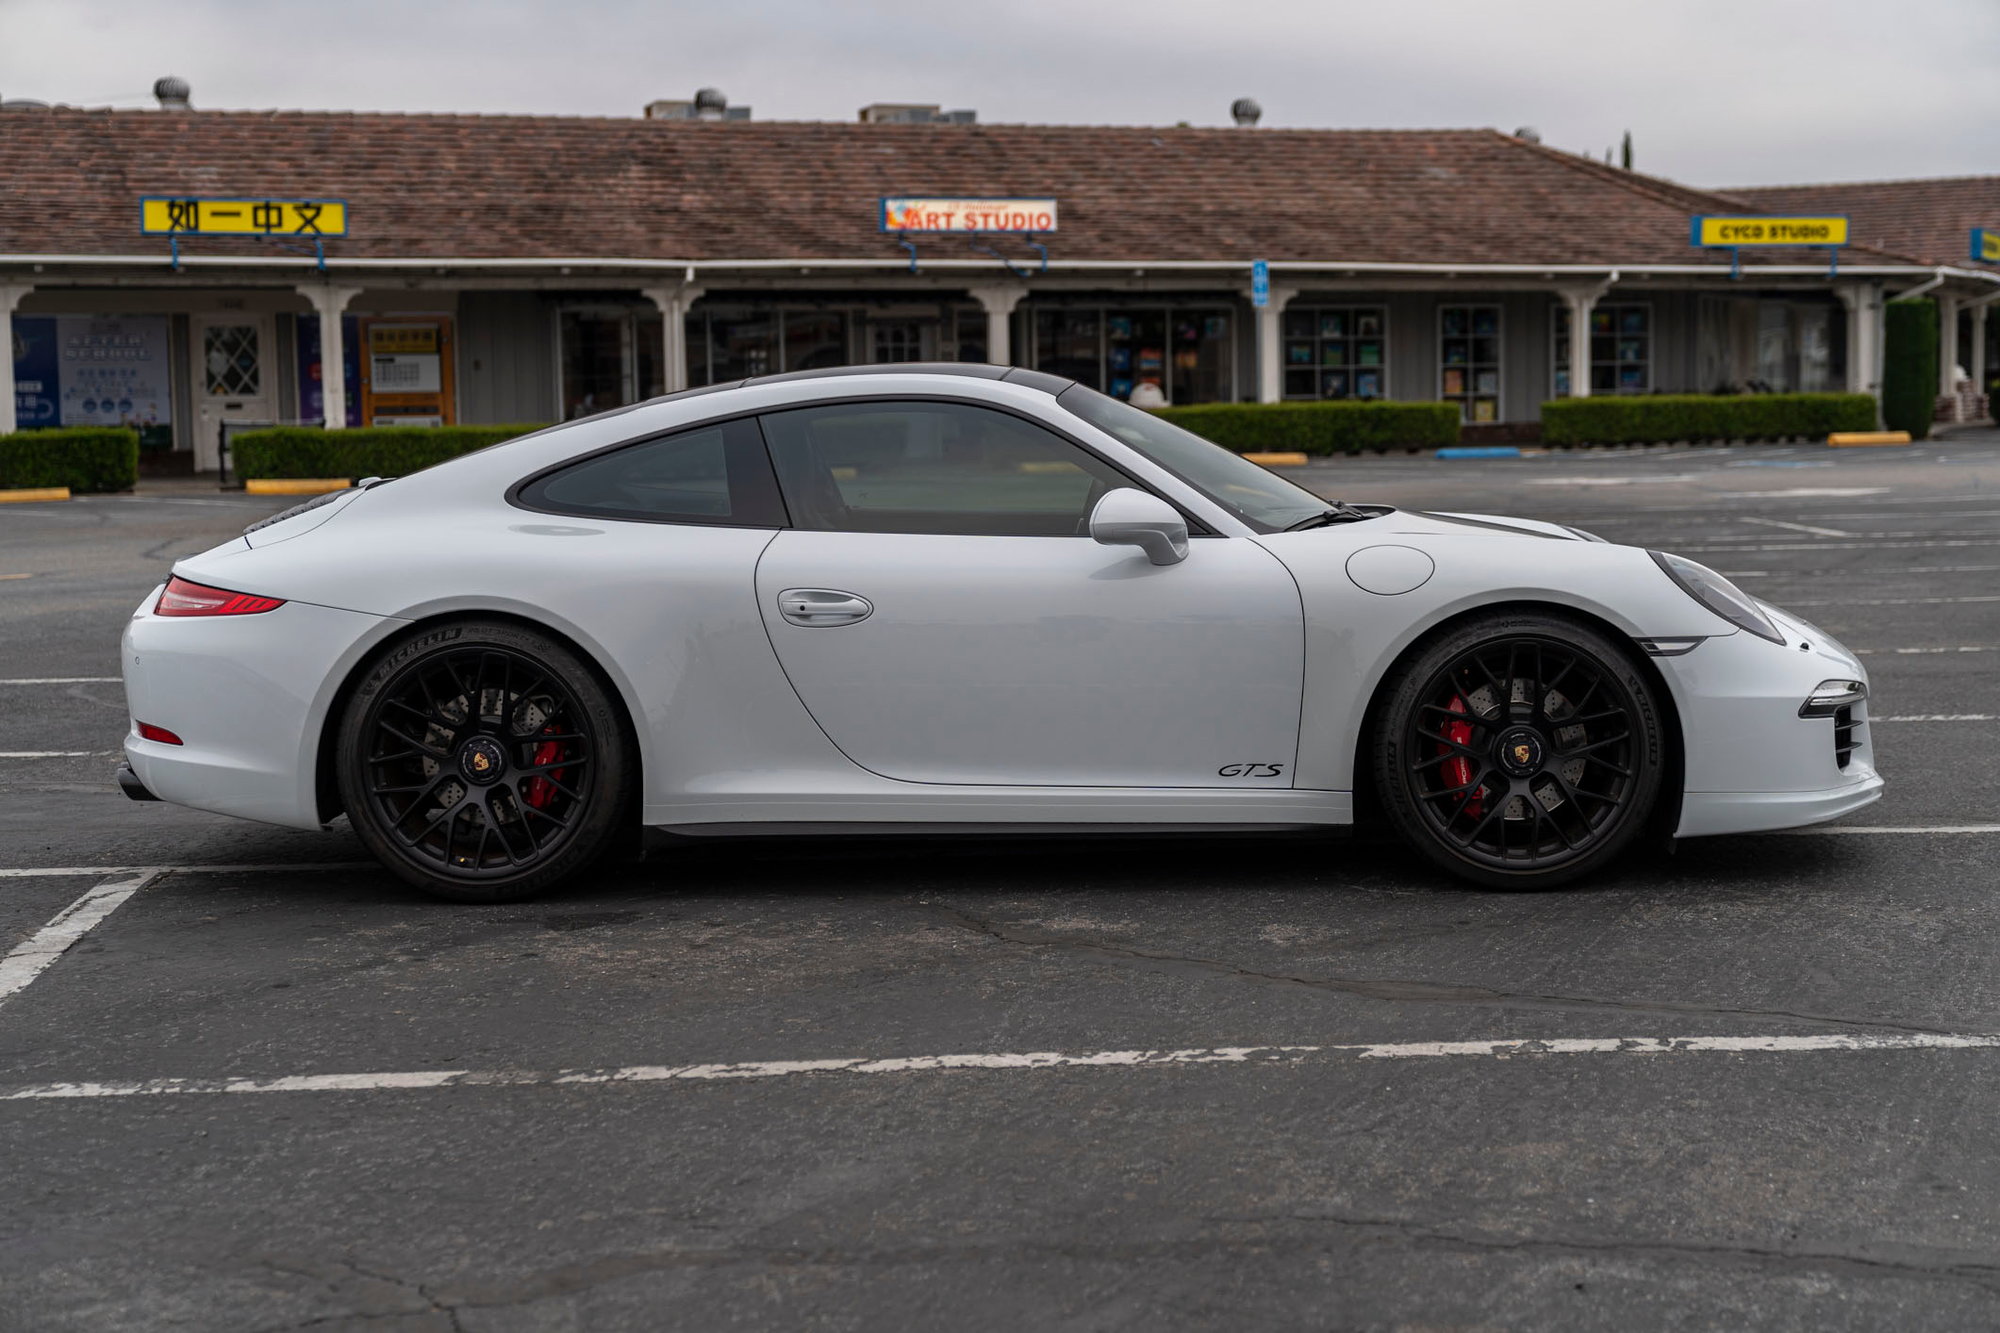 2015 Porsche 911 - 2015 911 GTS-25,084 miles, stunning car!!!  $115,000 OBO - Used - San Jose, CA 95124, United States